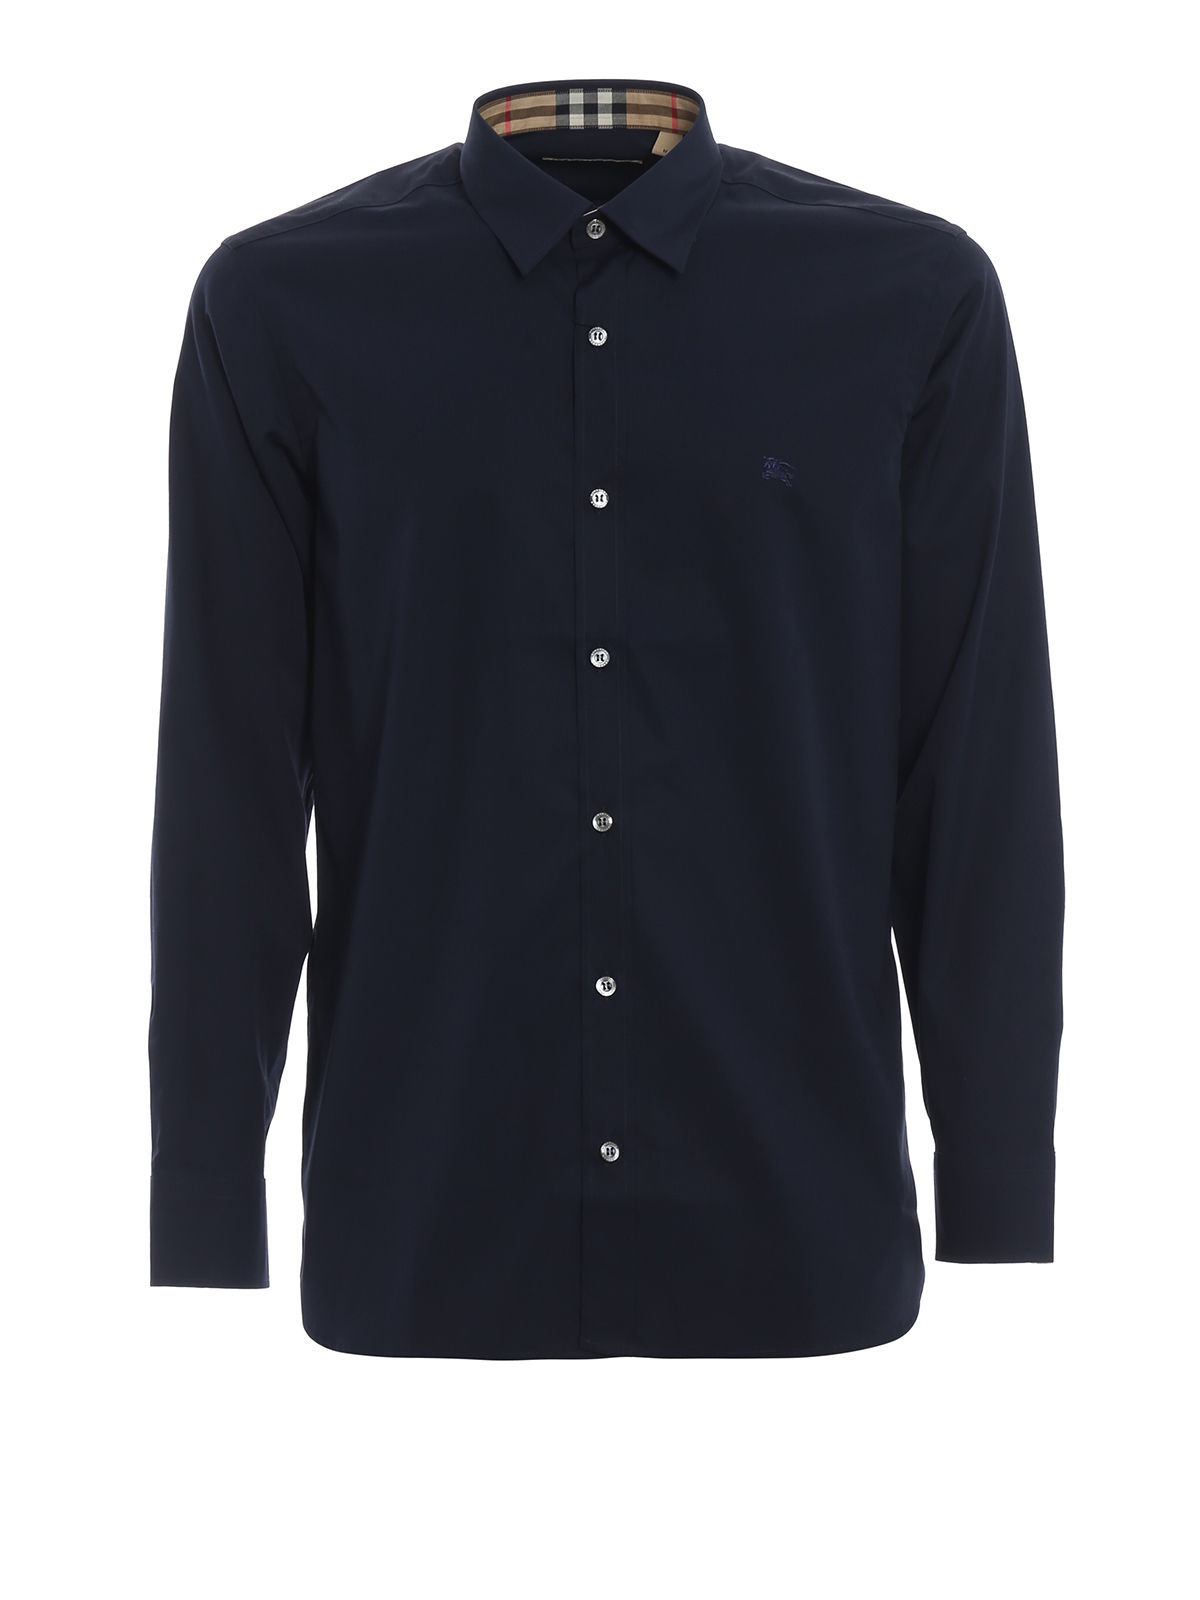 burberry navy blue shirt